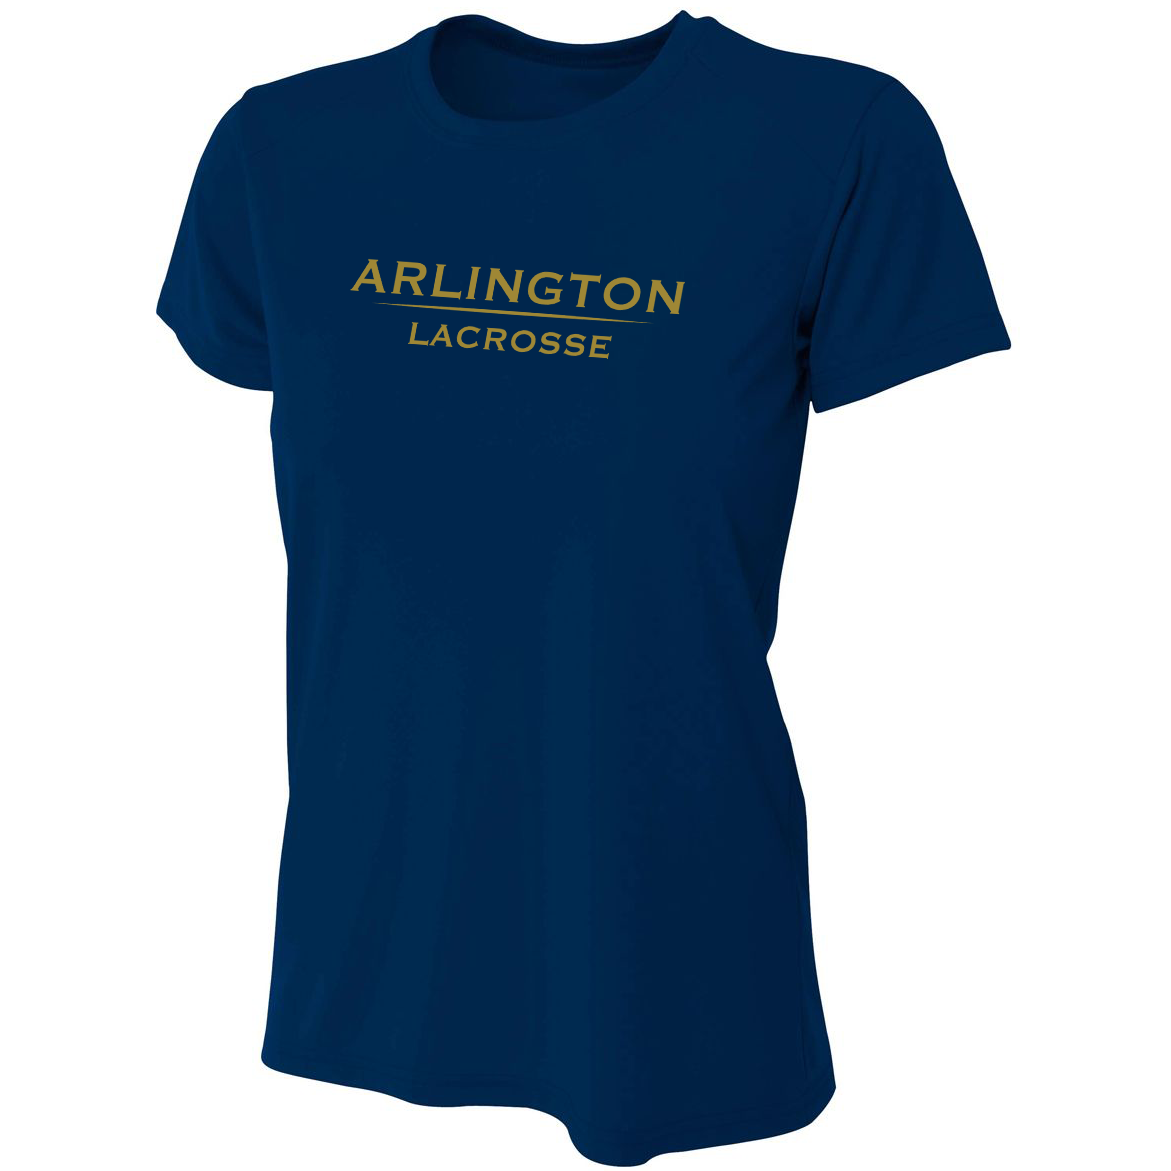 Arlington Lacrosse Women's Cooling Performance Crew